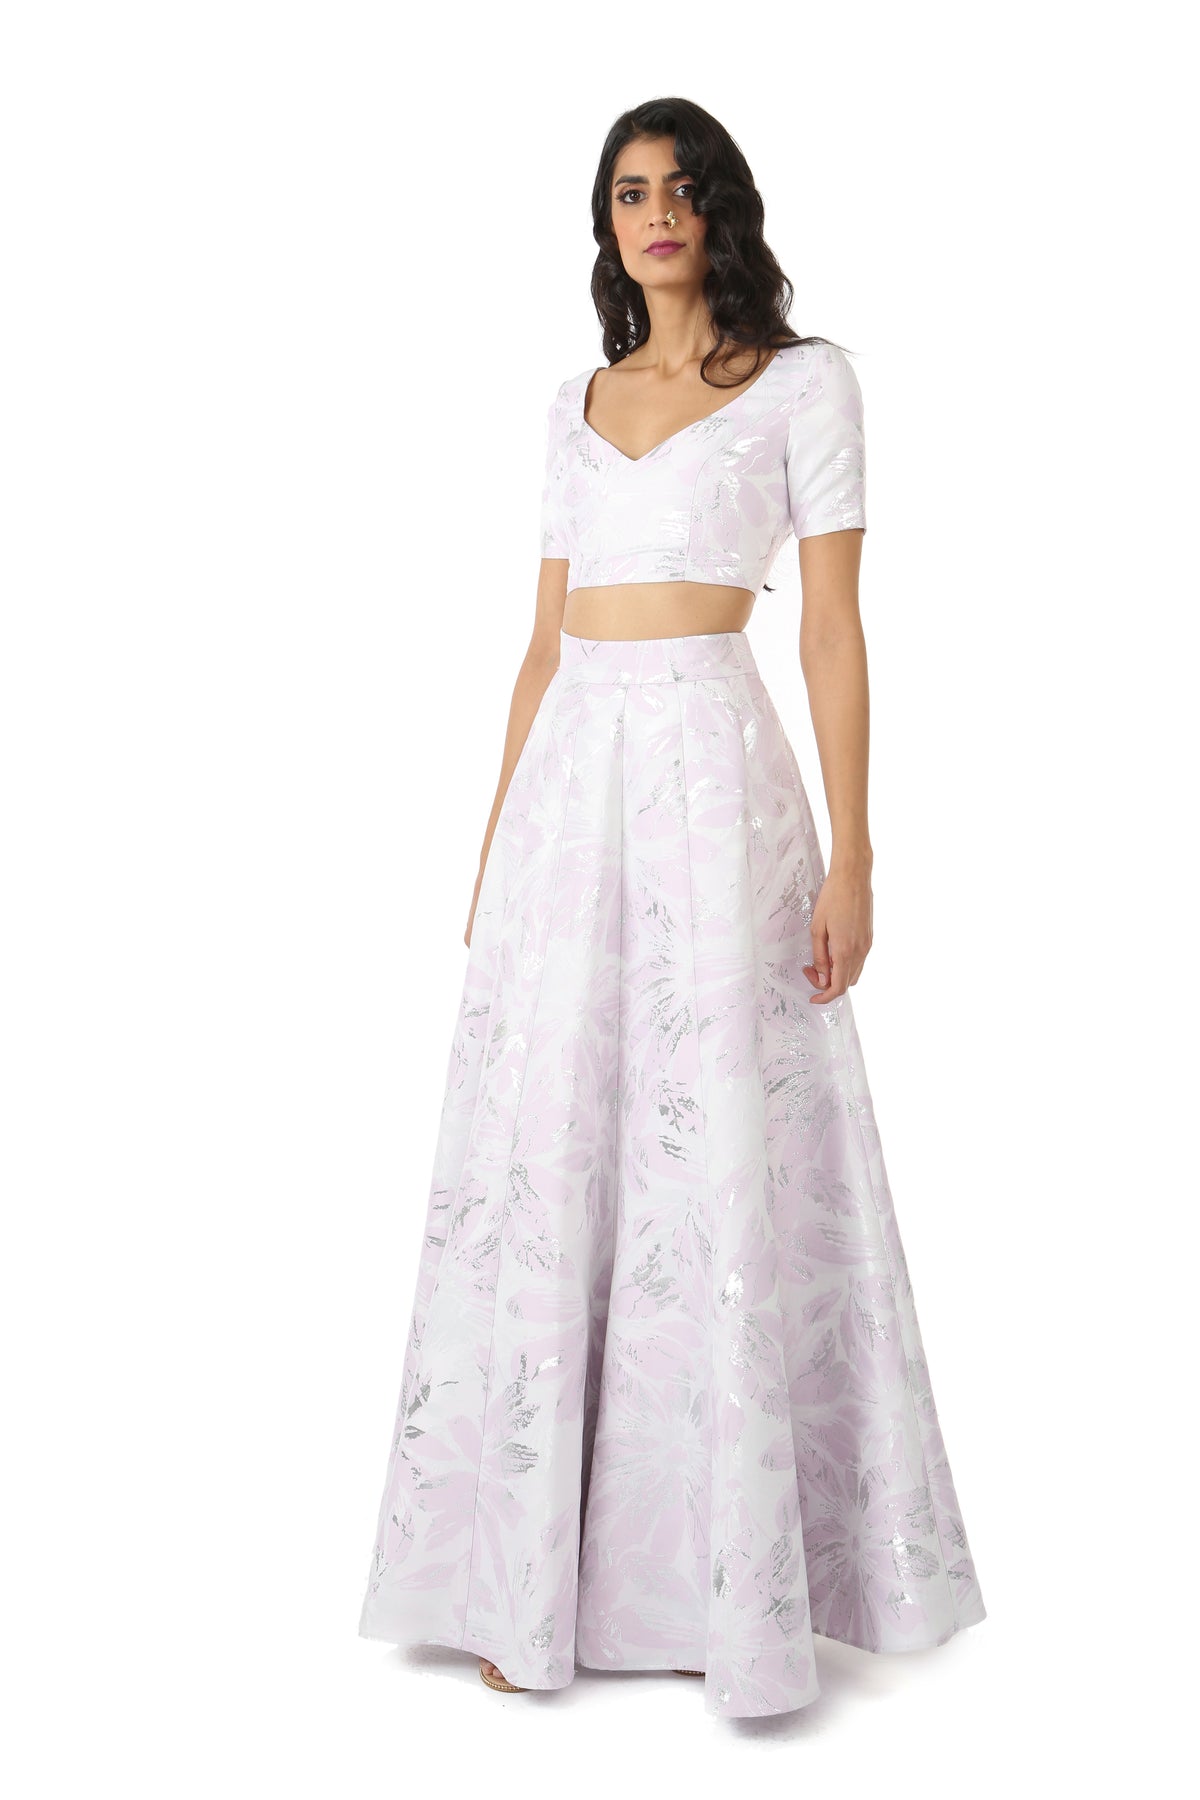 Harleen Kaur Metallic Silver and Lavender floral print on DIVYA lehenga skirt